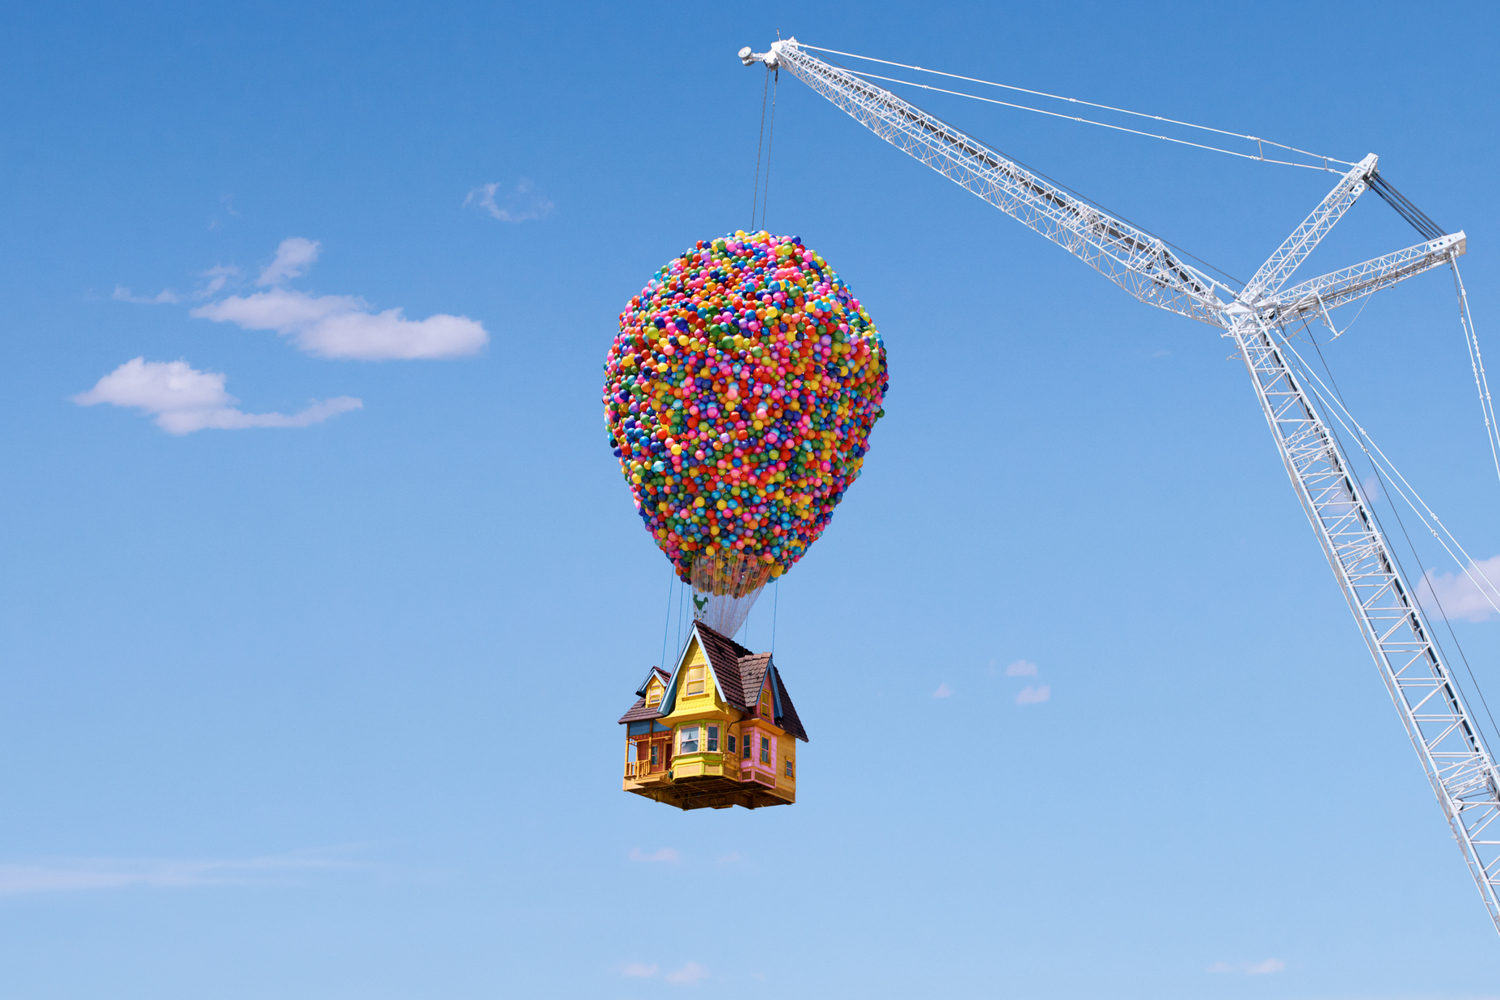 Pixar's UP House 入住《天外奇迹》气球屋